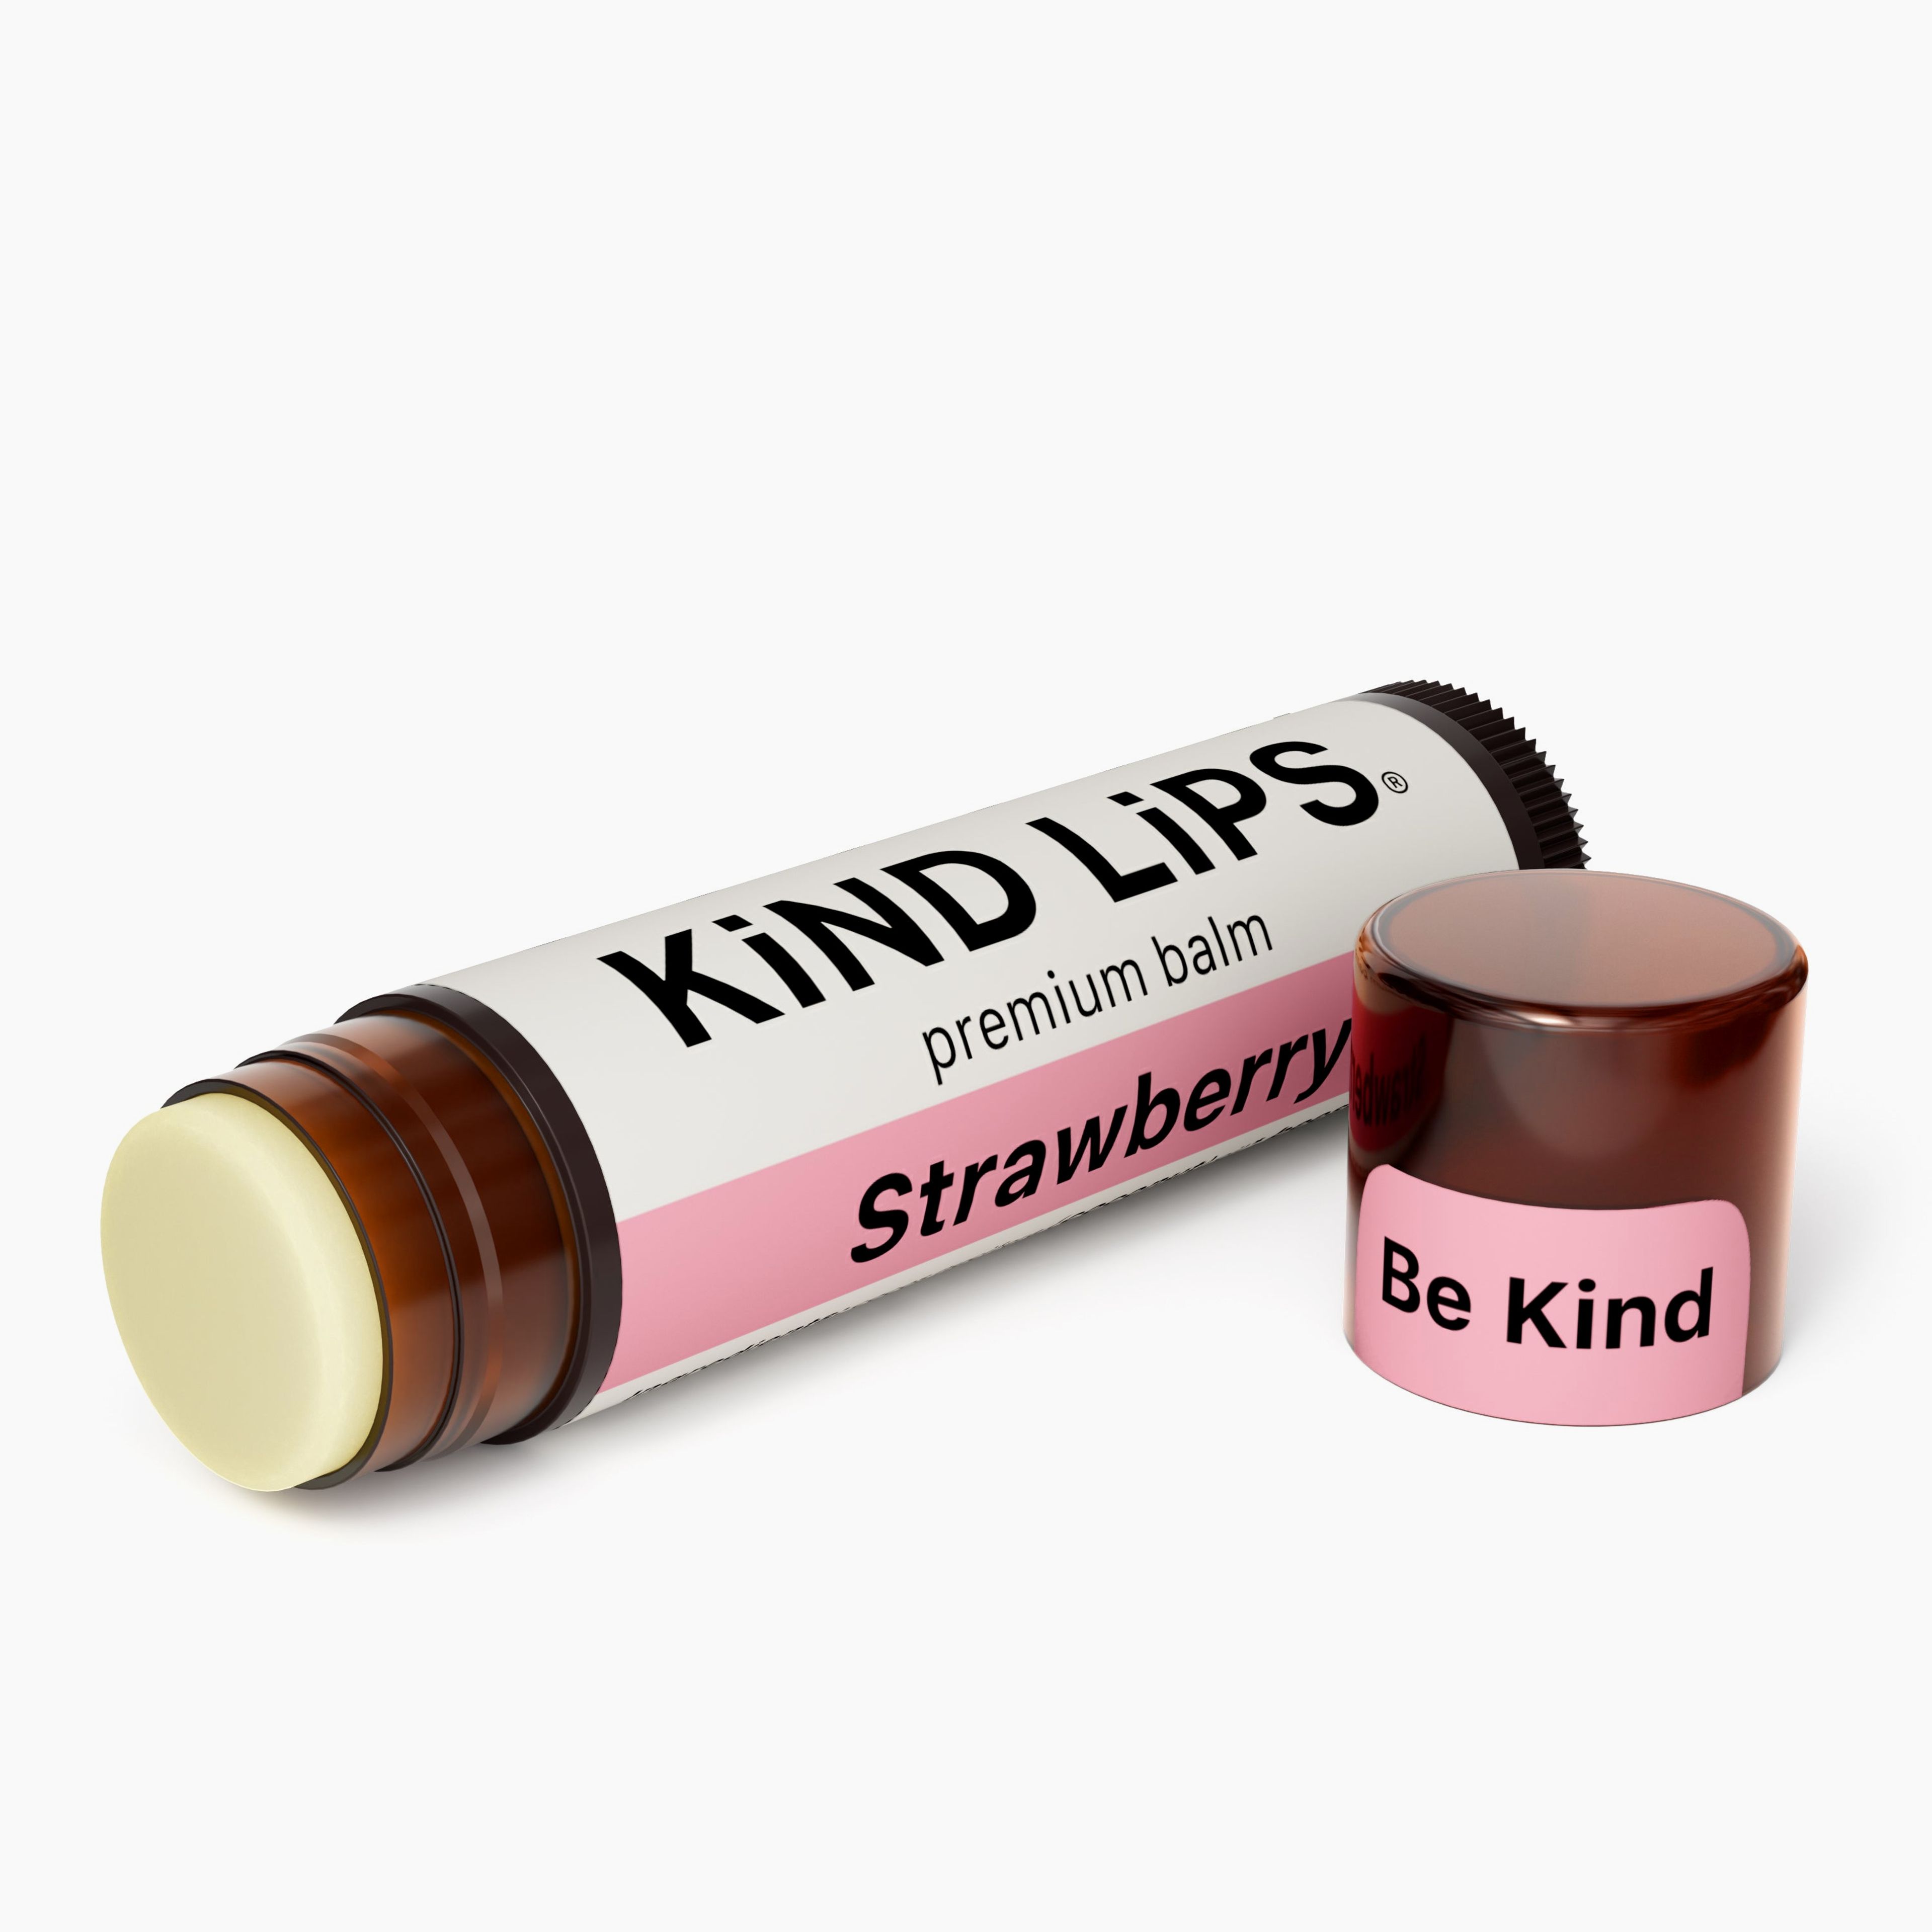 Strawberry Organic Lip Balm